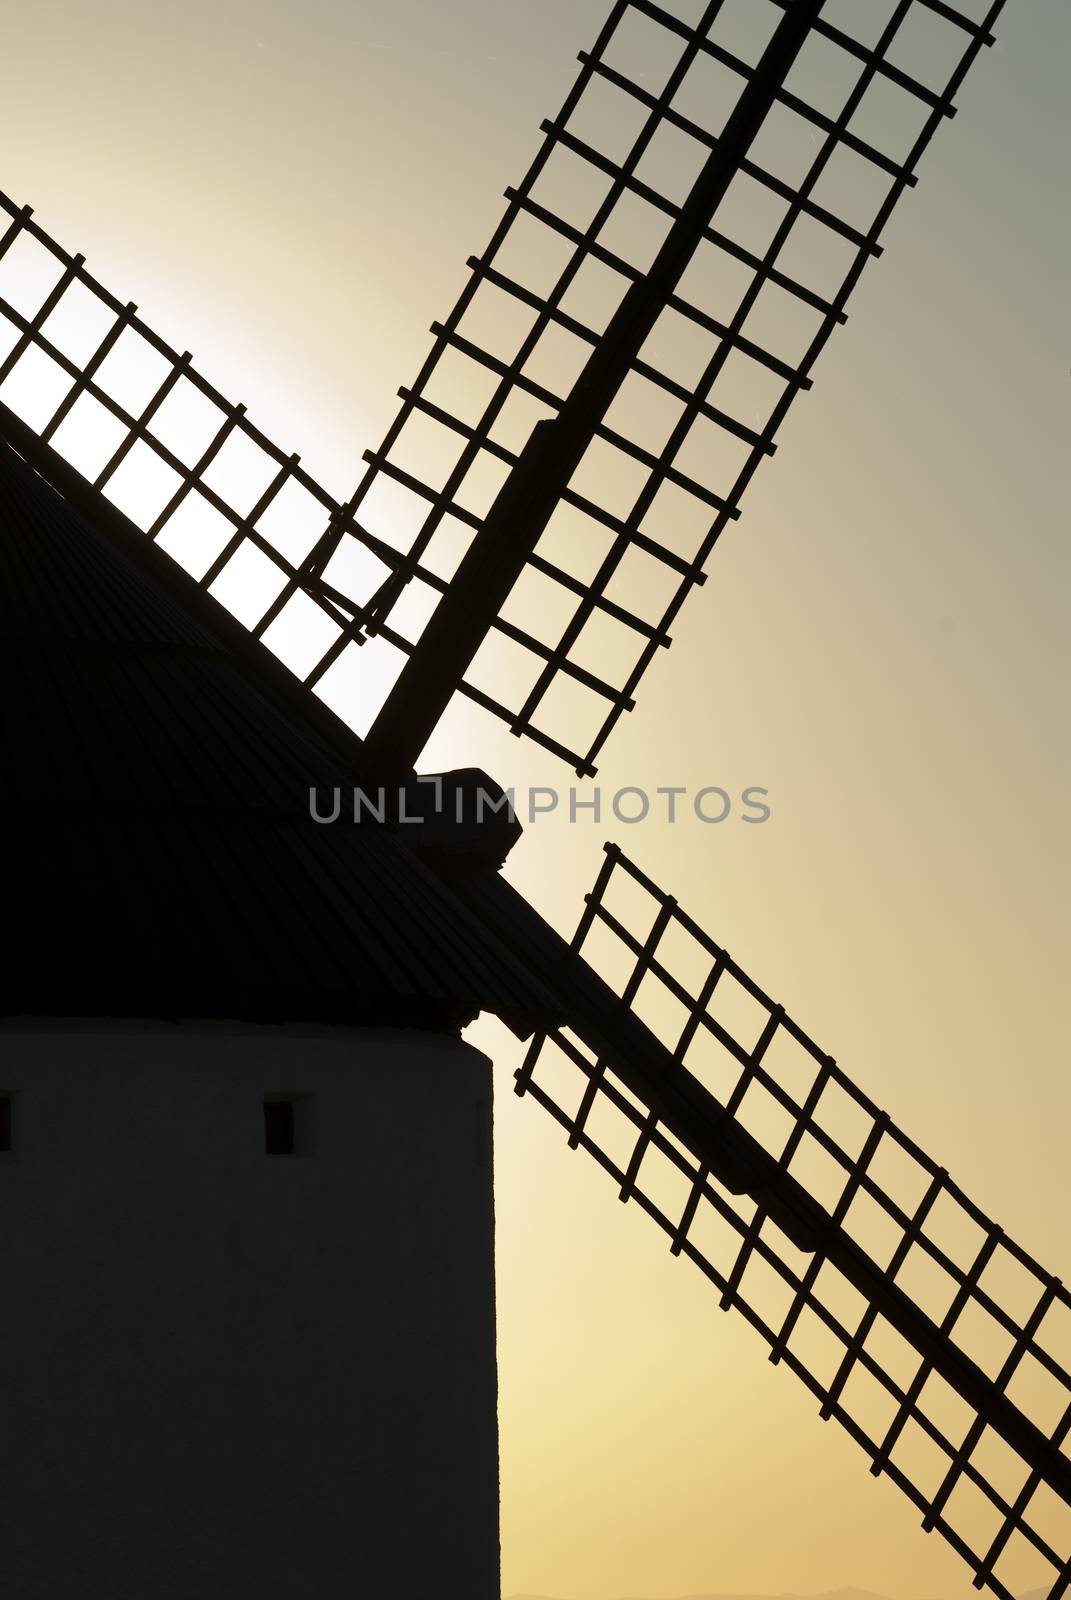 Windmills, Wind energy, Nocturnal Campo de Criptana, Ciudad Real, Spain